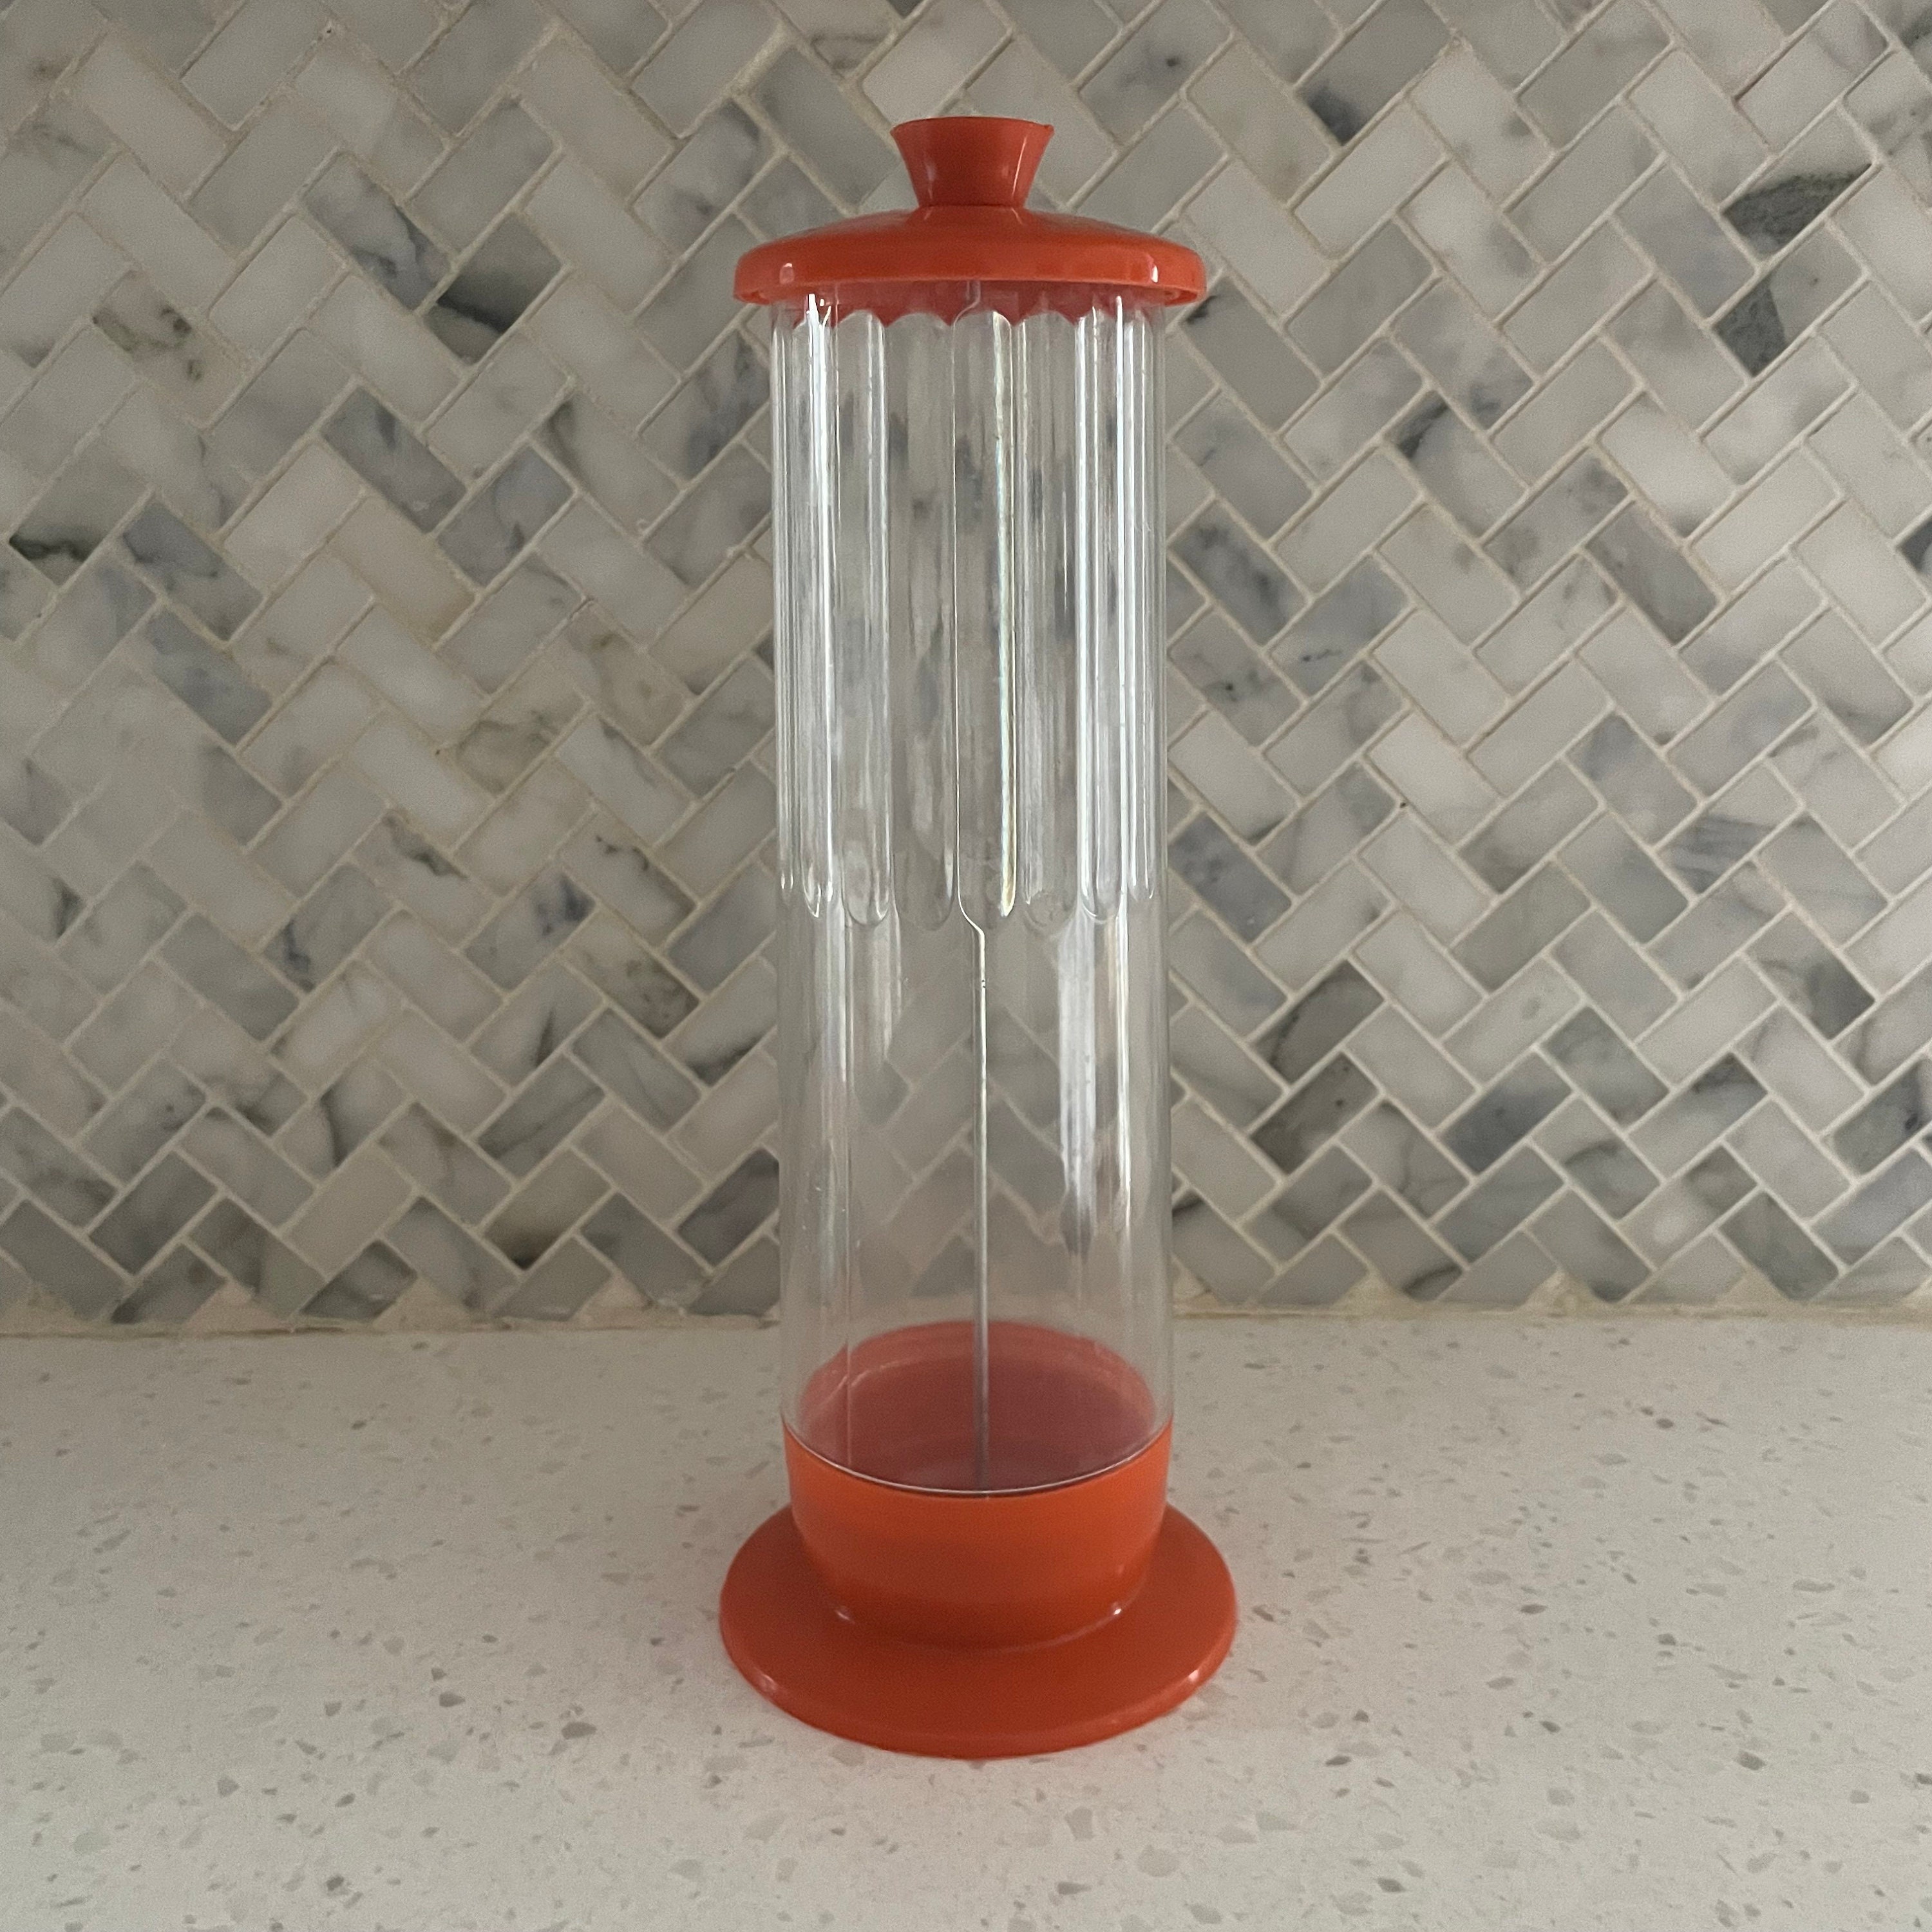 Farberware (New York, USA) Glass and Stainless Steel Straw Dispenser – The  Standing Rabbit